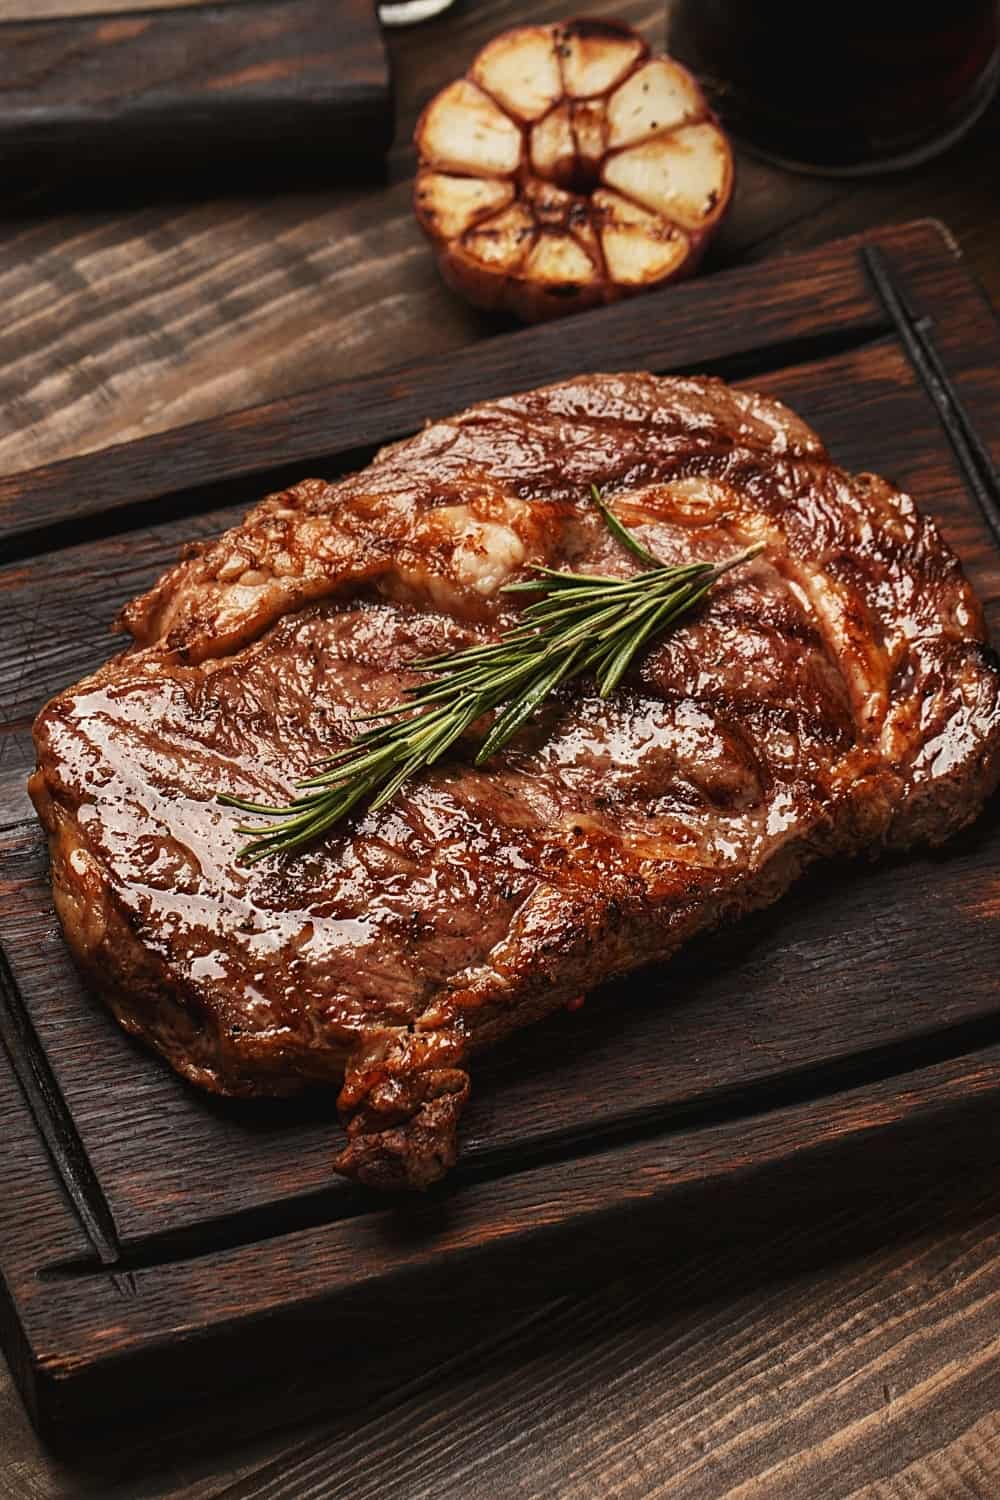 Grilled ribeye beef steak served on wooden board